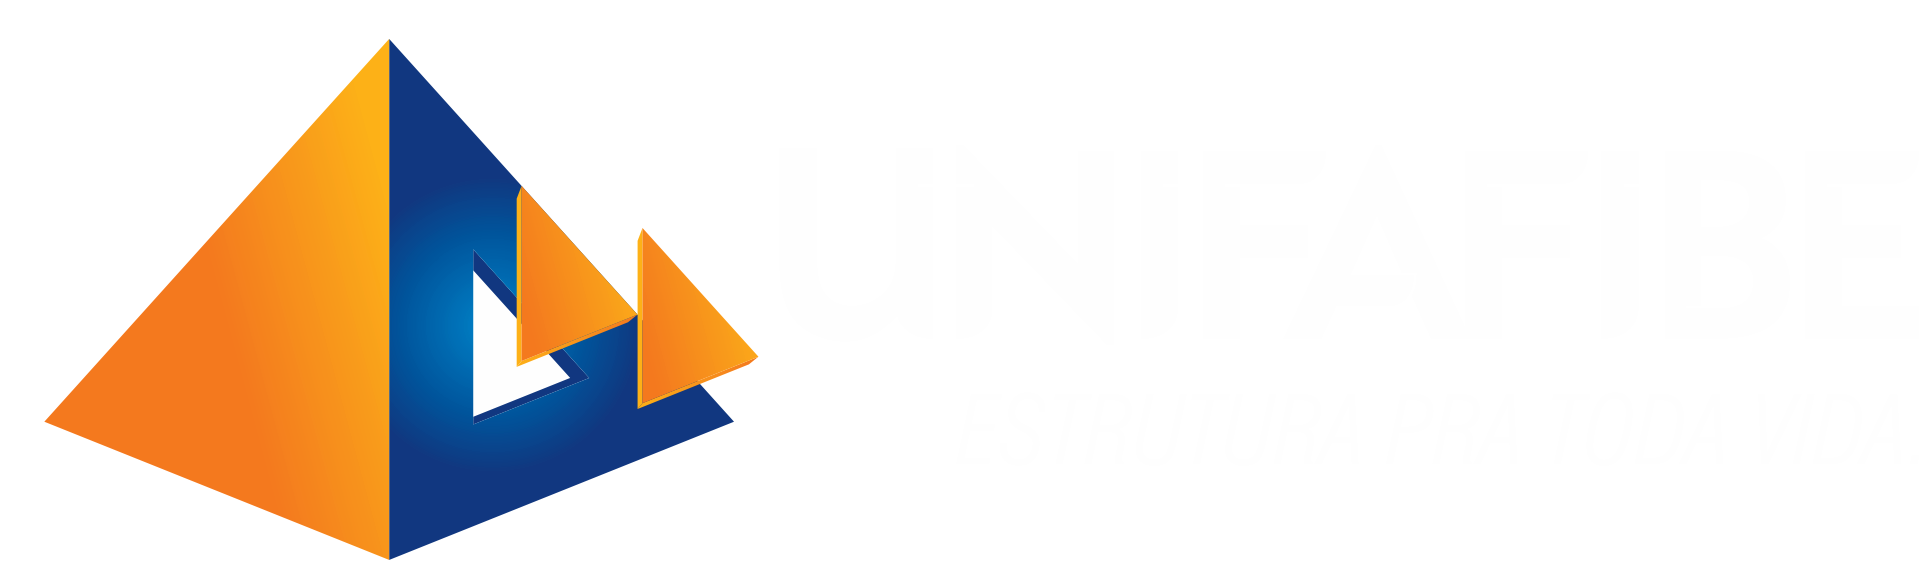 Logo UNIFAFIBE